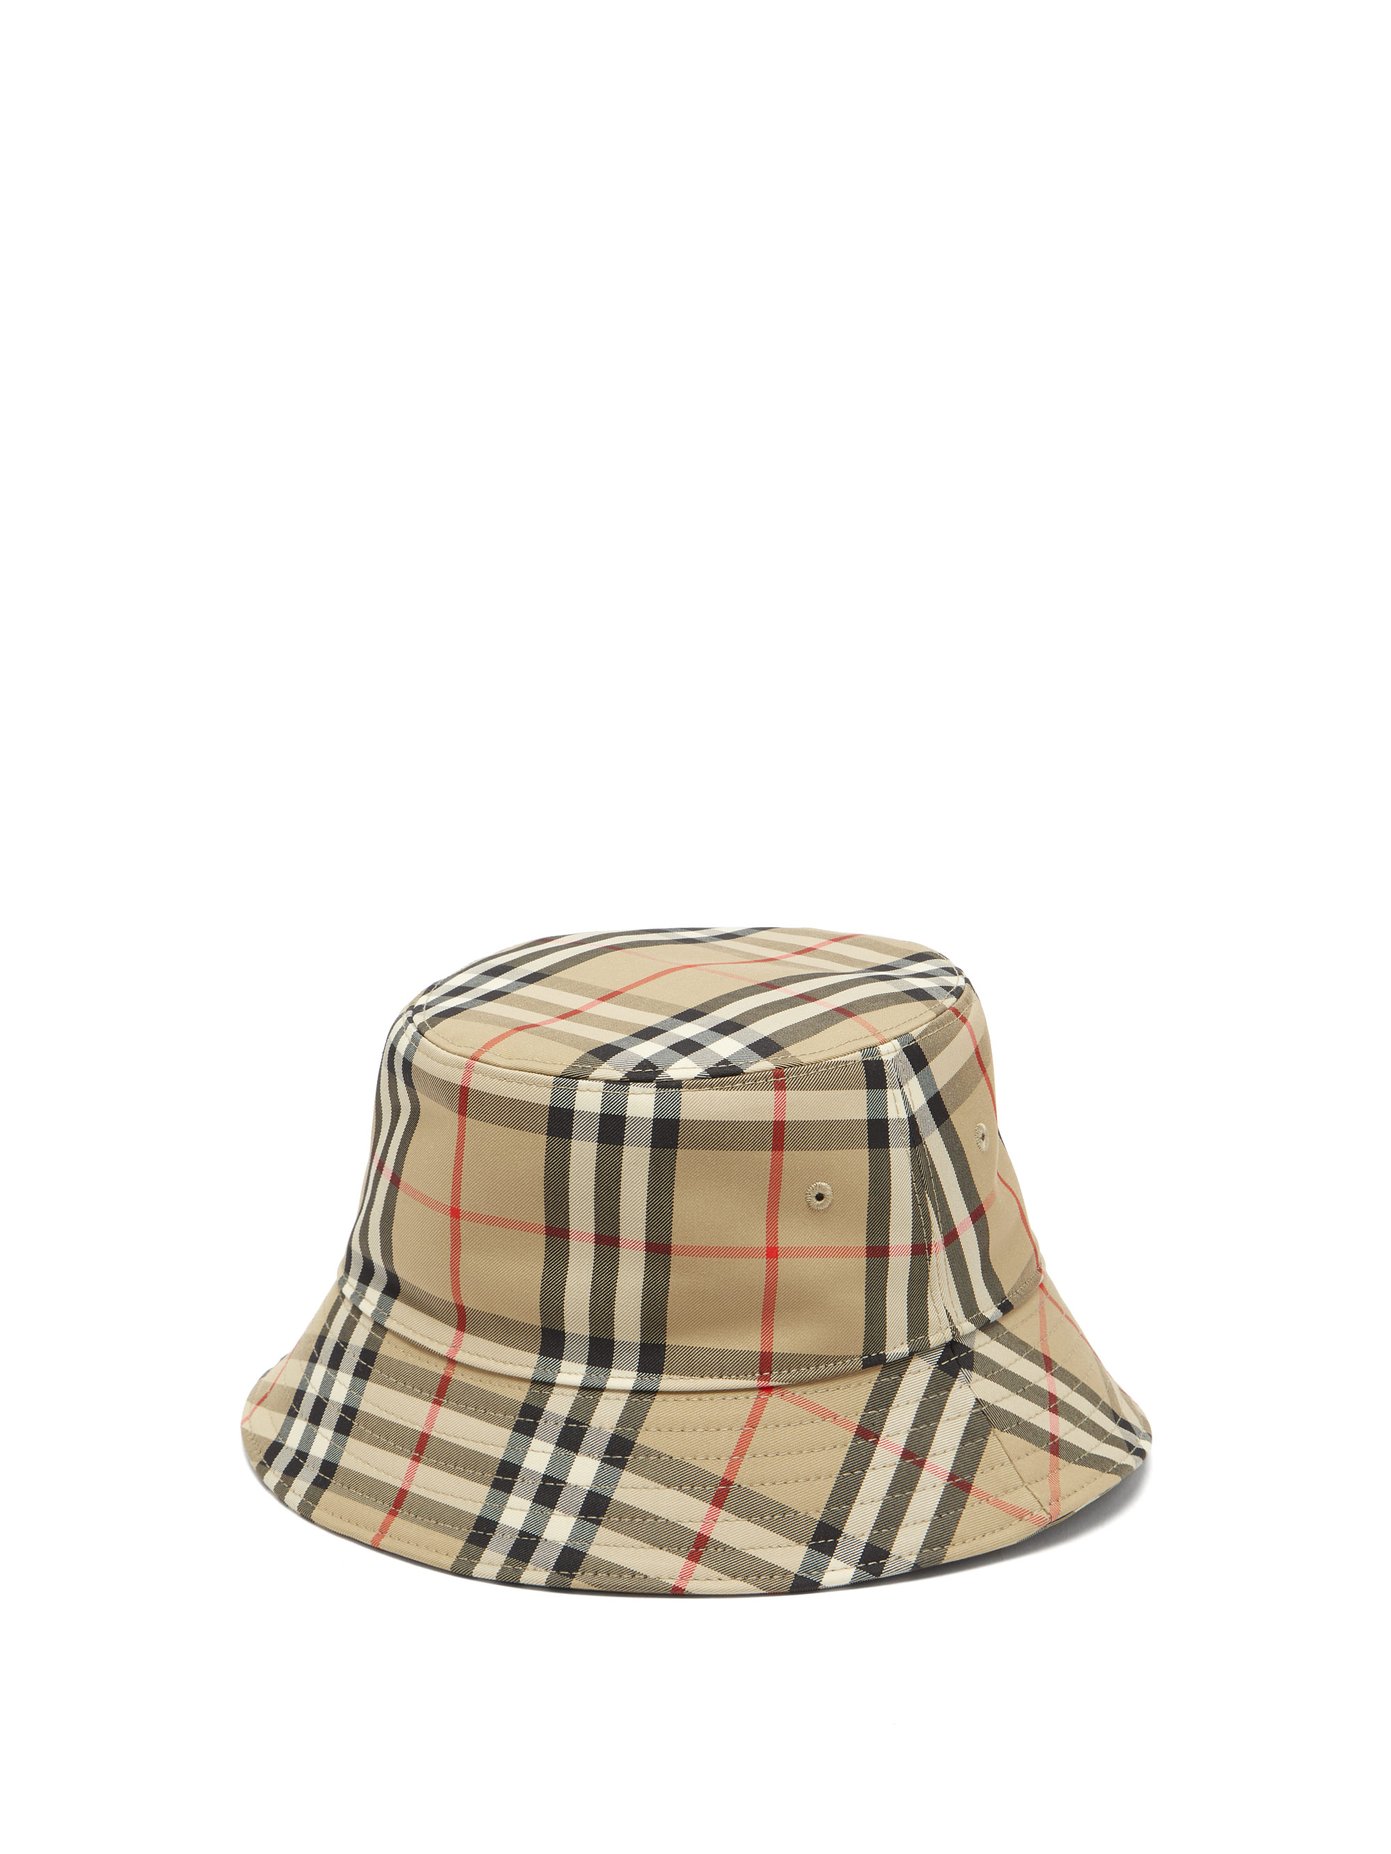 burberry check bucket hat